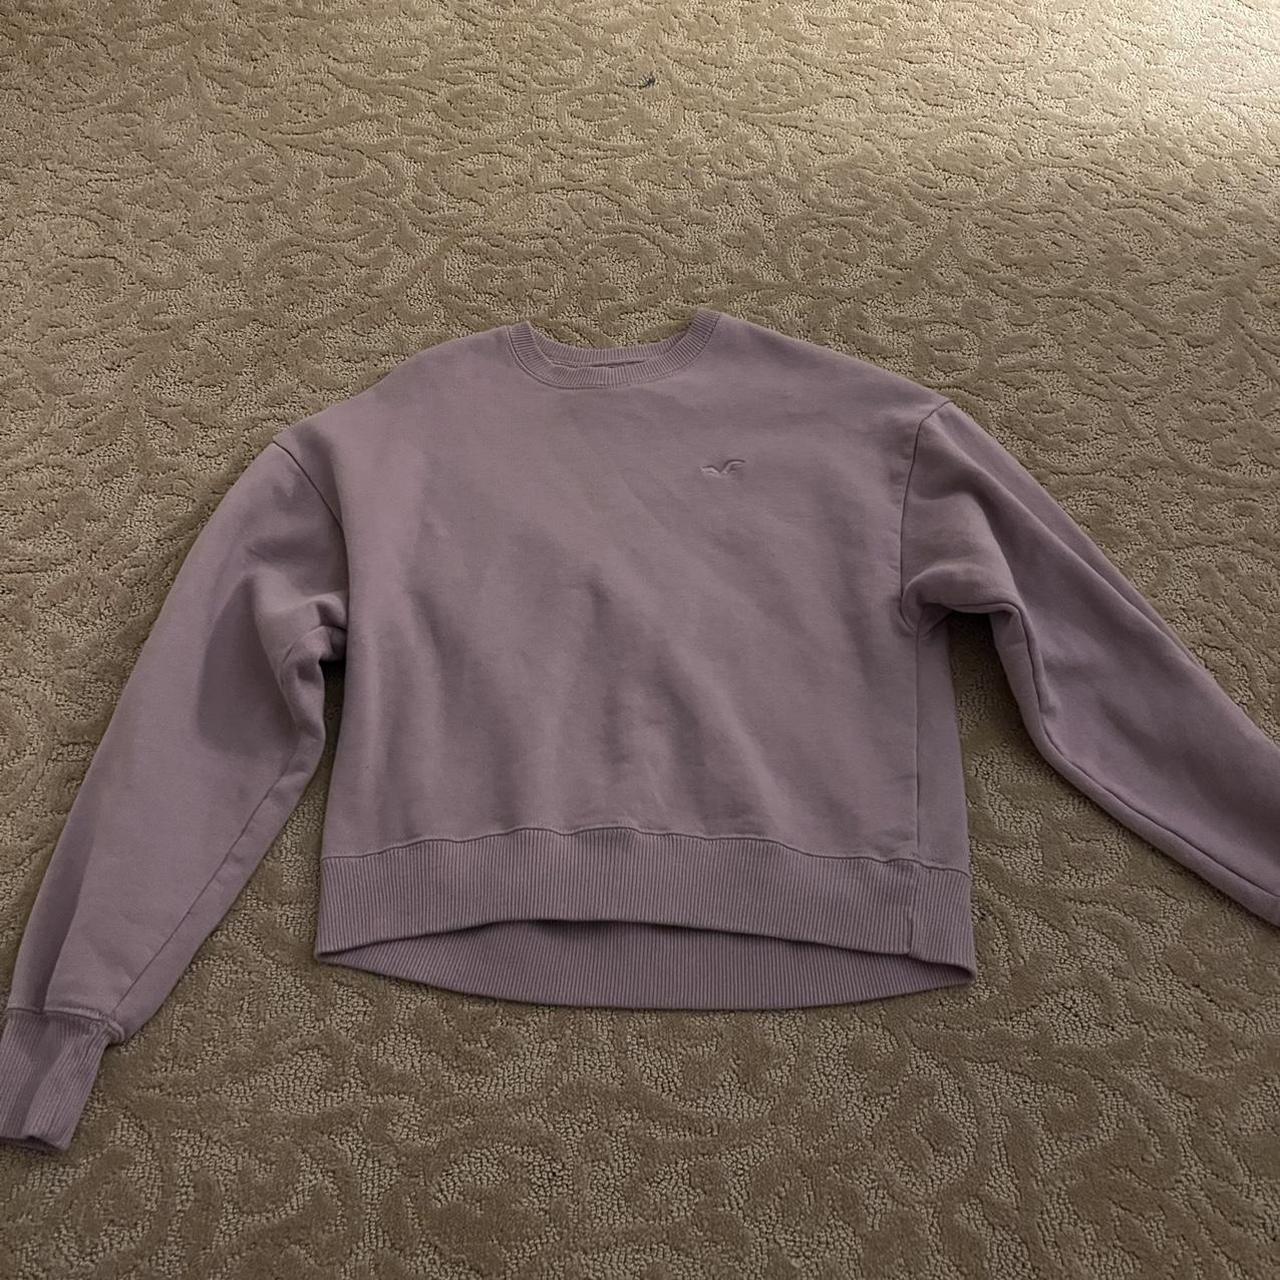 Lavender purple hollister cropped sweater - Depop